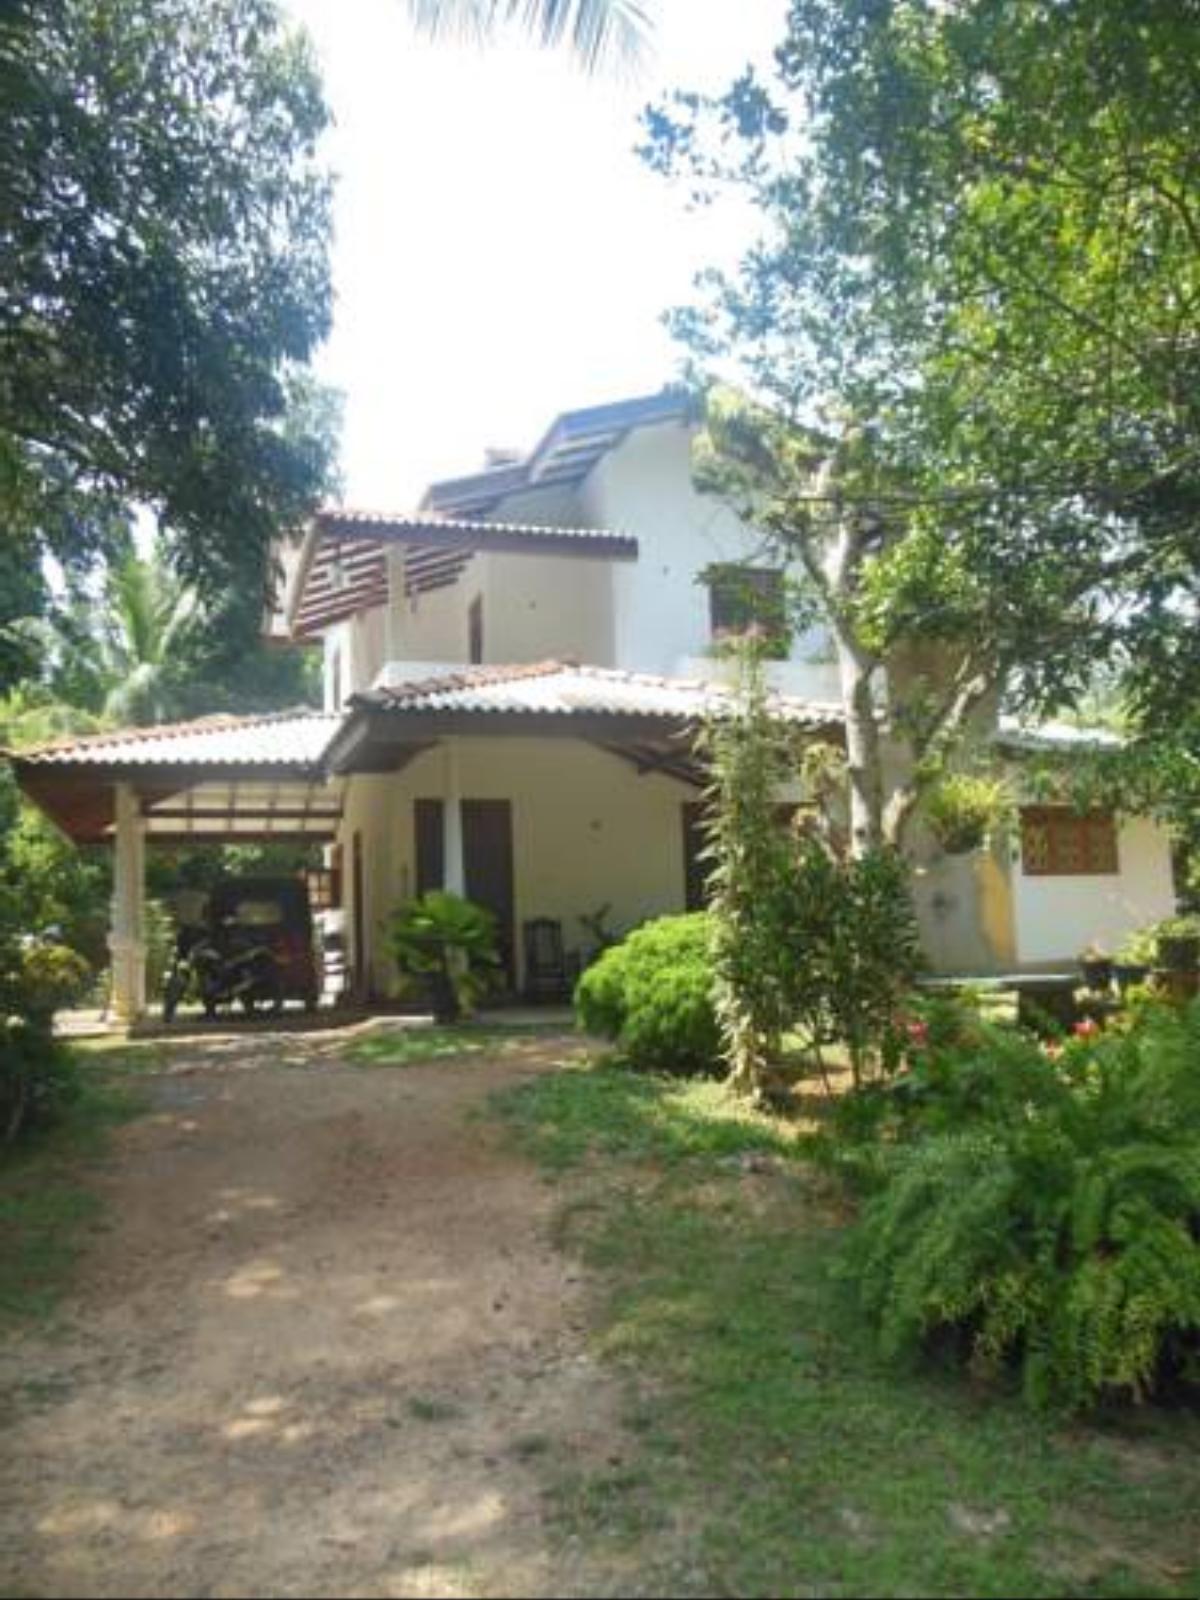 Rent a Room Hotel Gonapinuwala West Sri Lanka